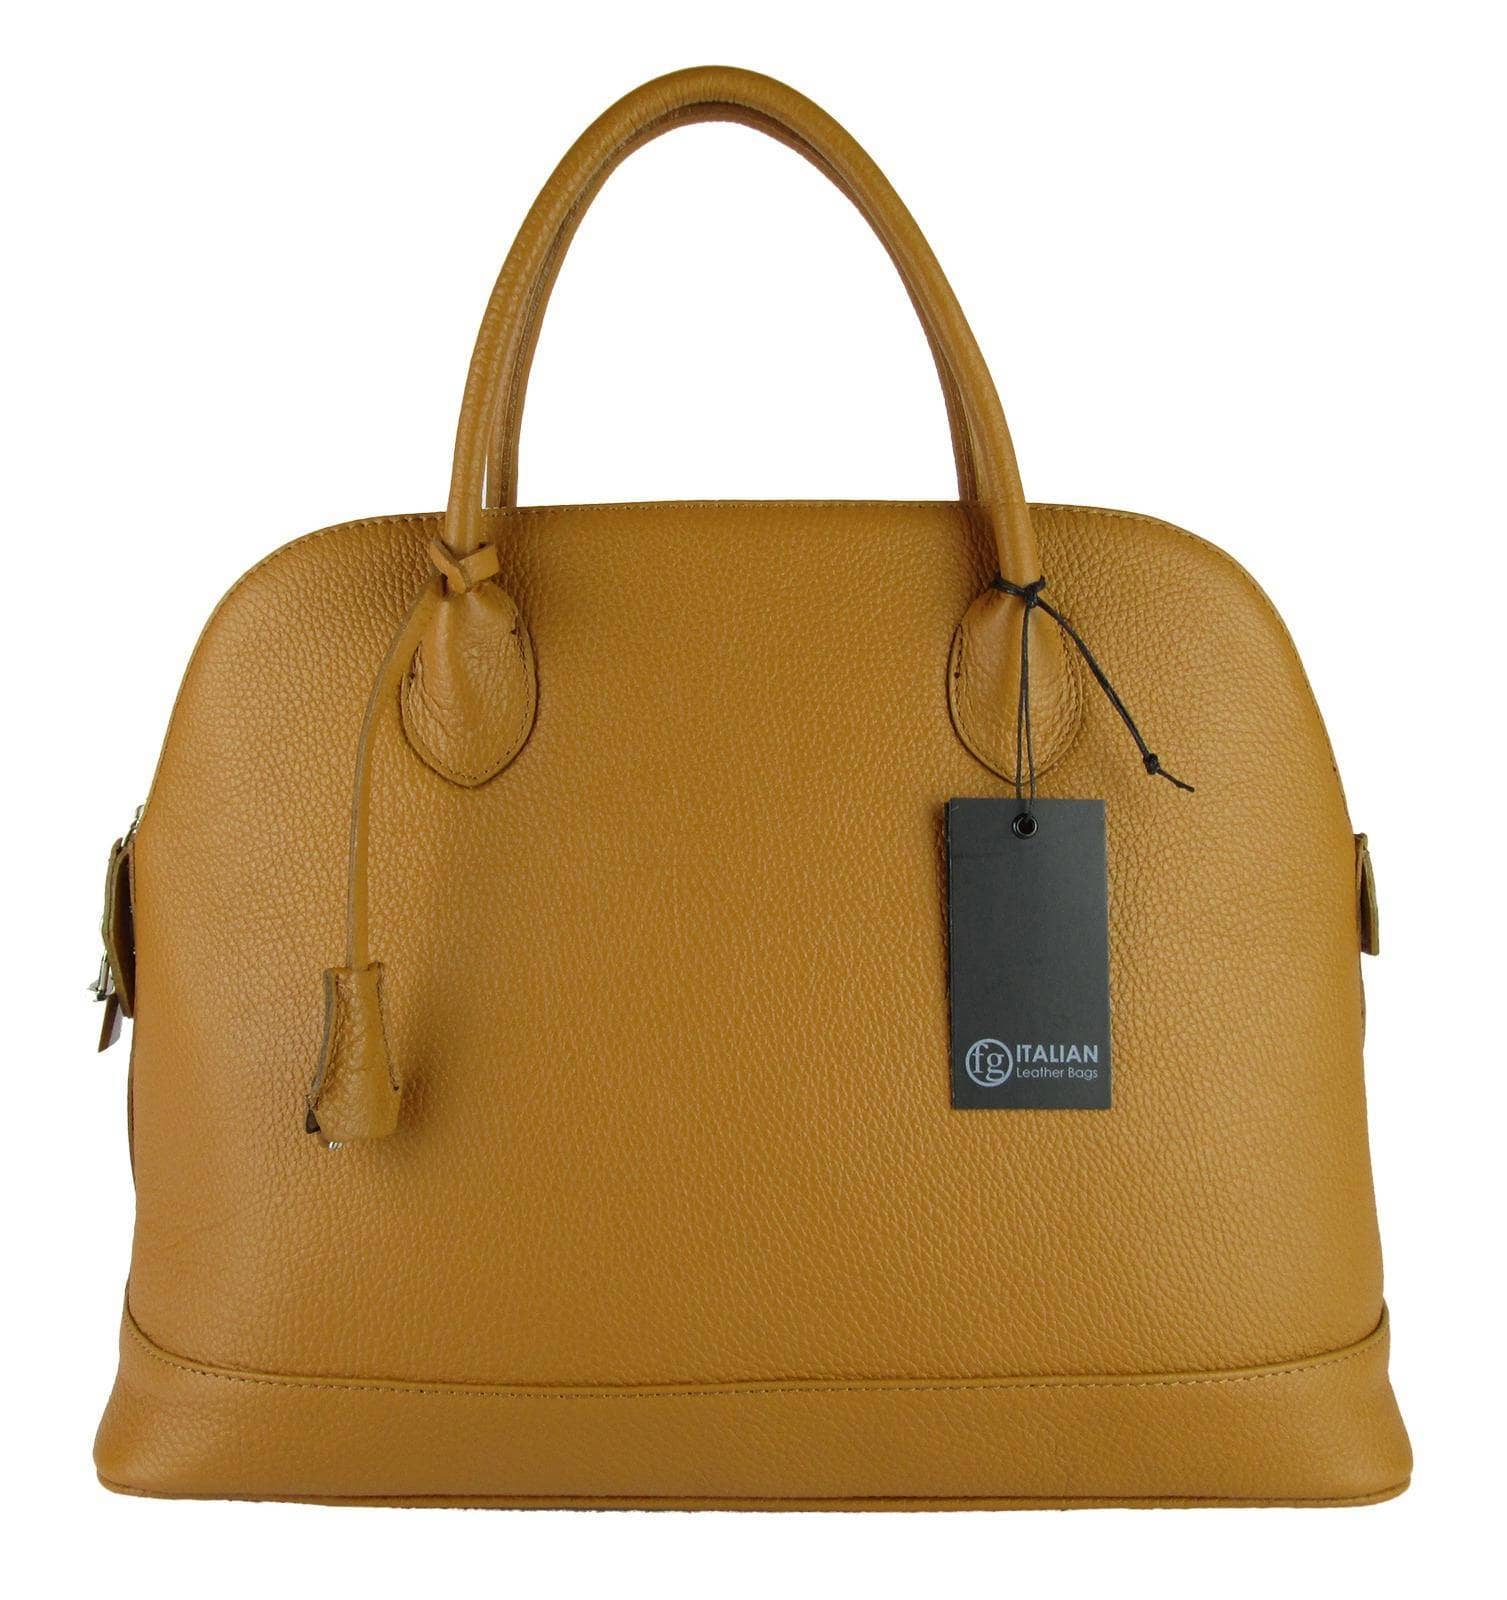 Italian handbags: Italian handbags wholesale and private label, made in Italy